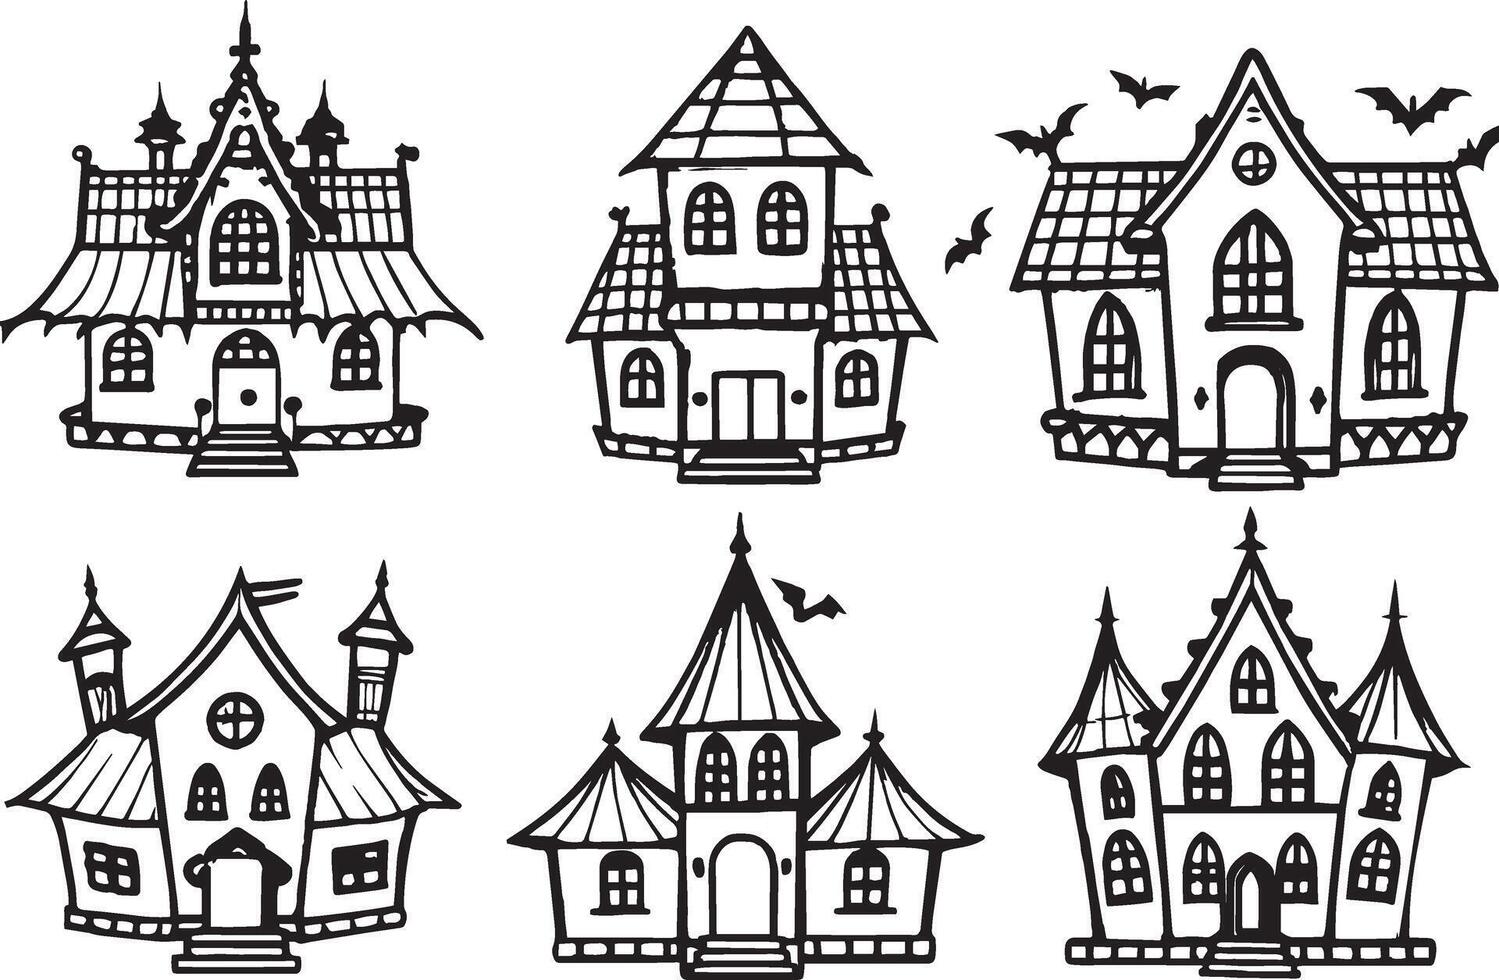 Halloween House Set - Black and White Illustration vector